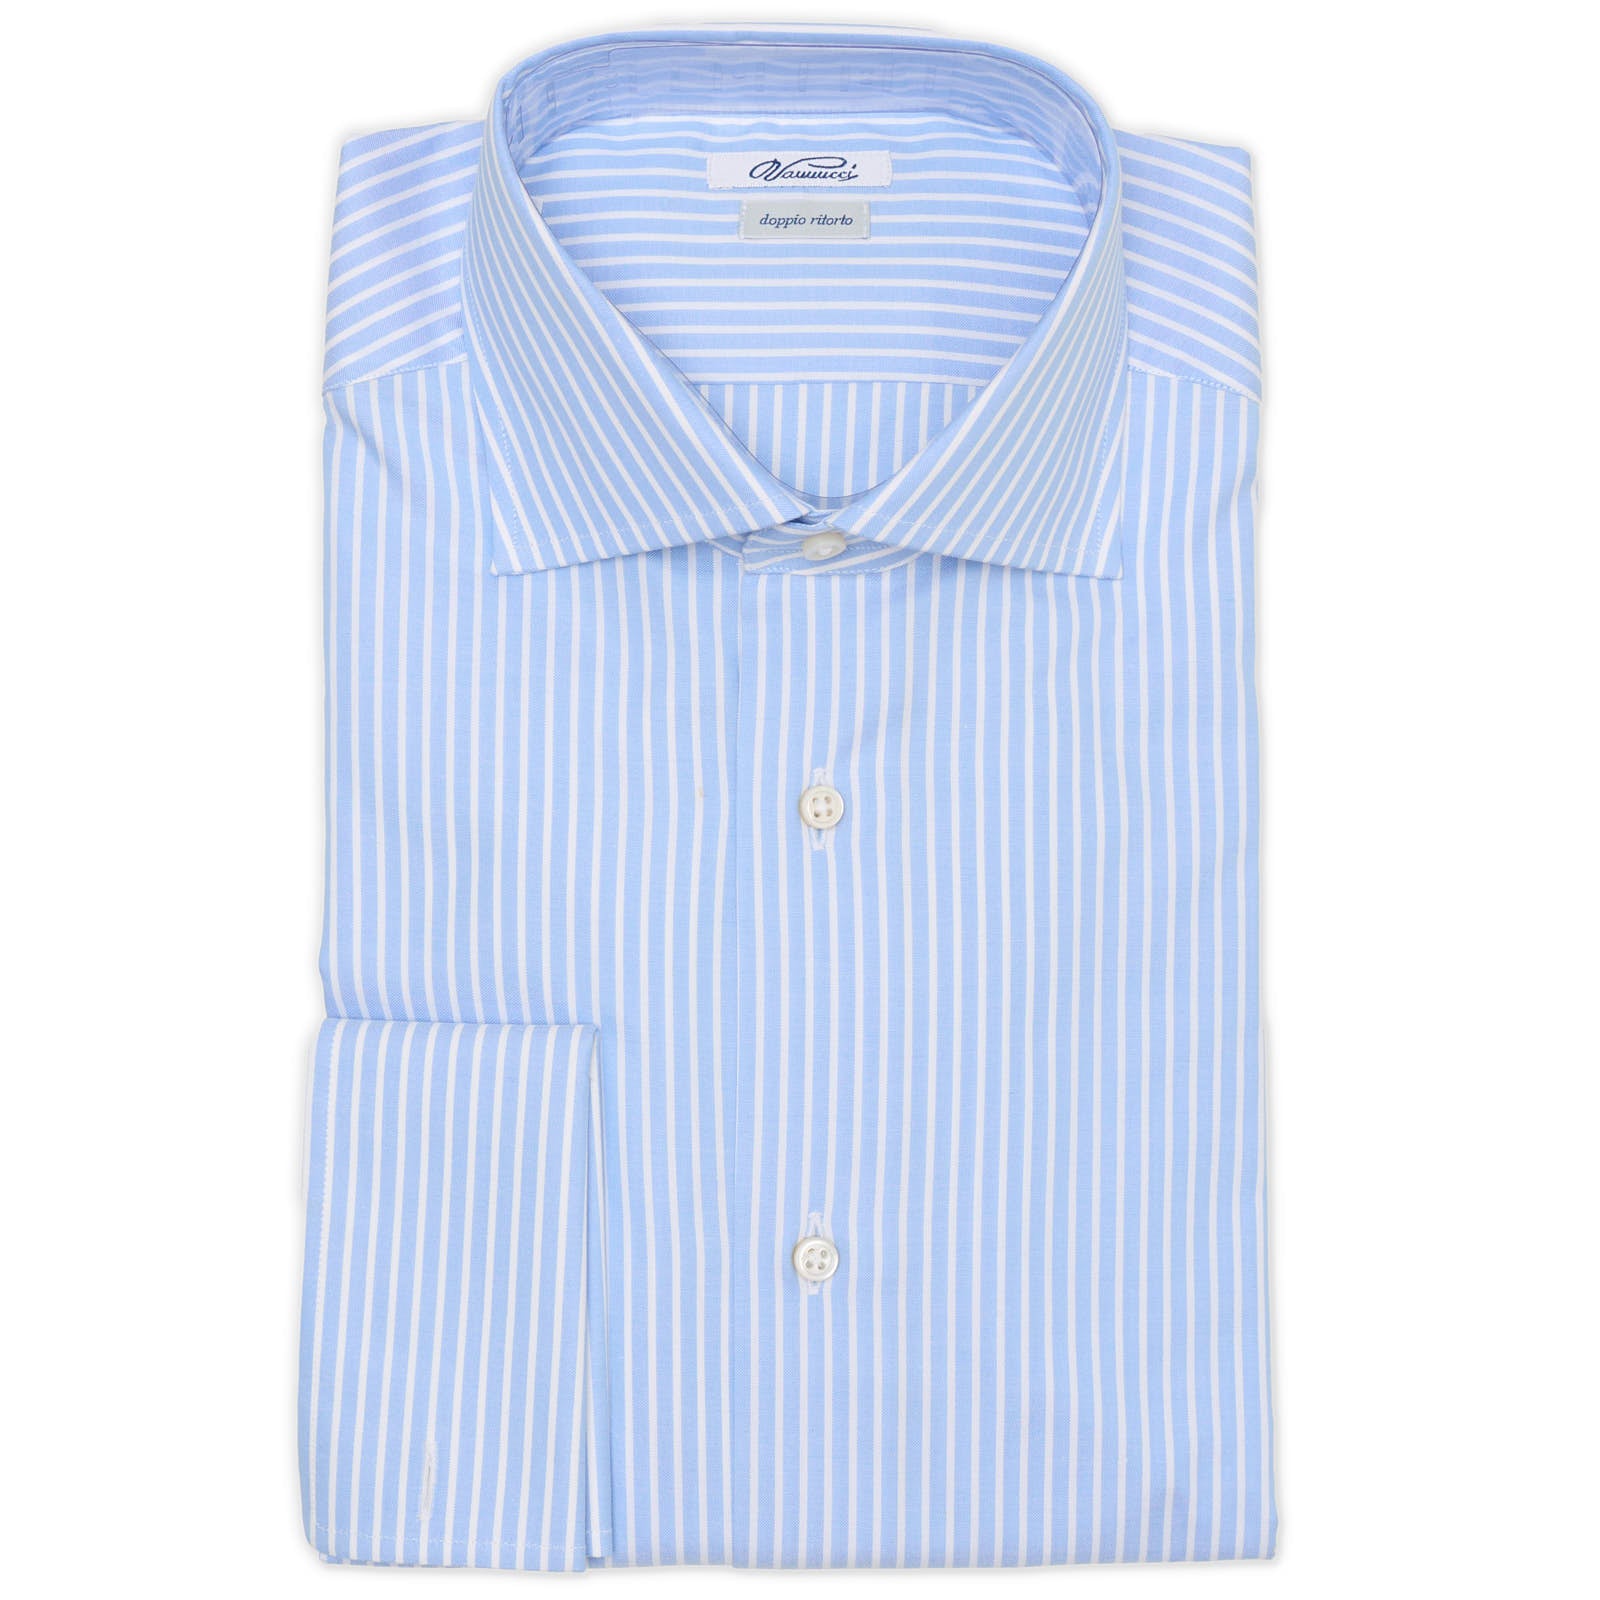 VANNUCCI Milano Blue-White Striped Cotton French Cuff Dress Shirt EU 40 NEW US 15.75